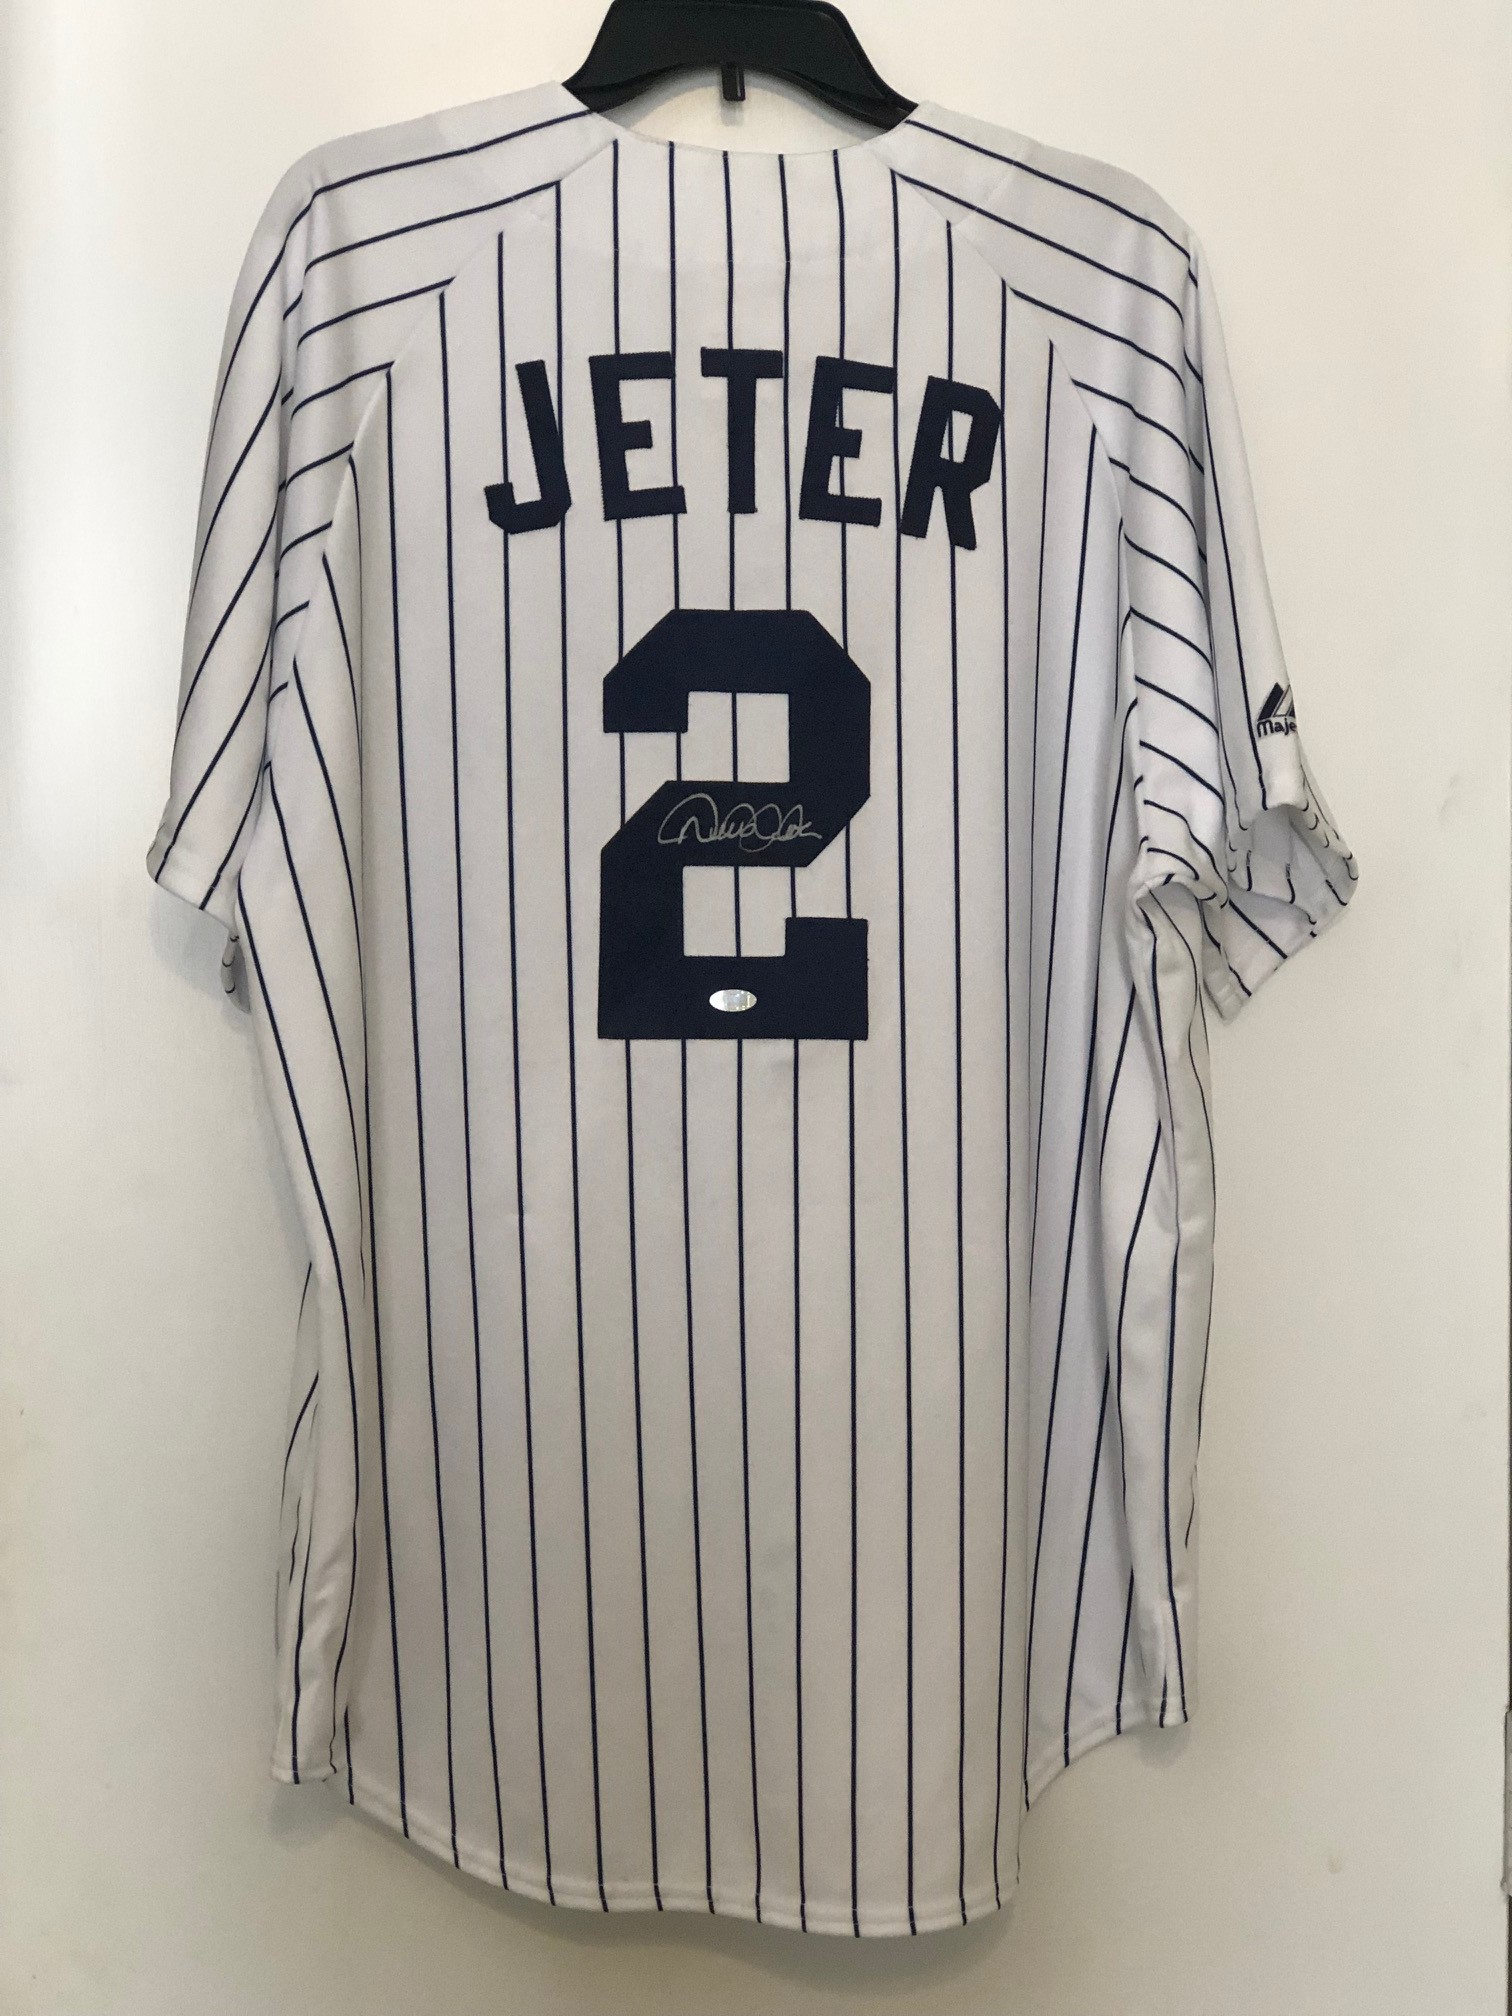 Derek Jeter Autographed New York Yankees Baseball Jersey - MLB